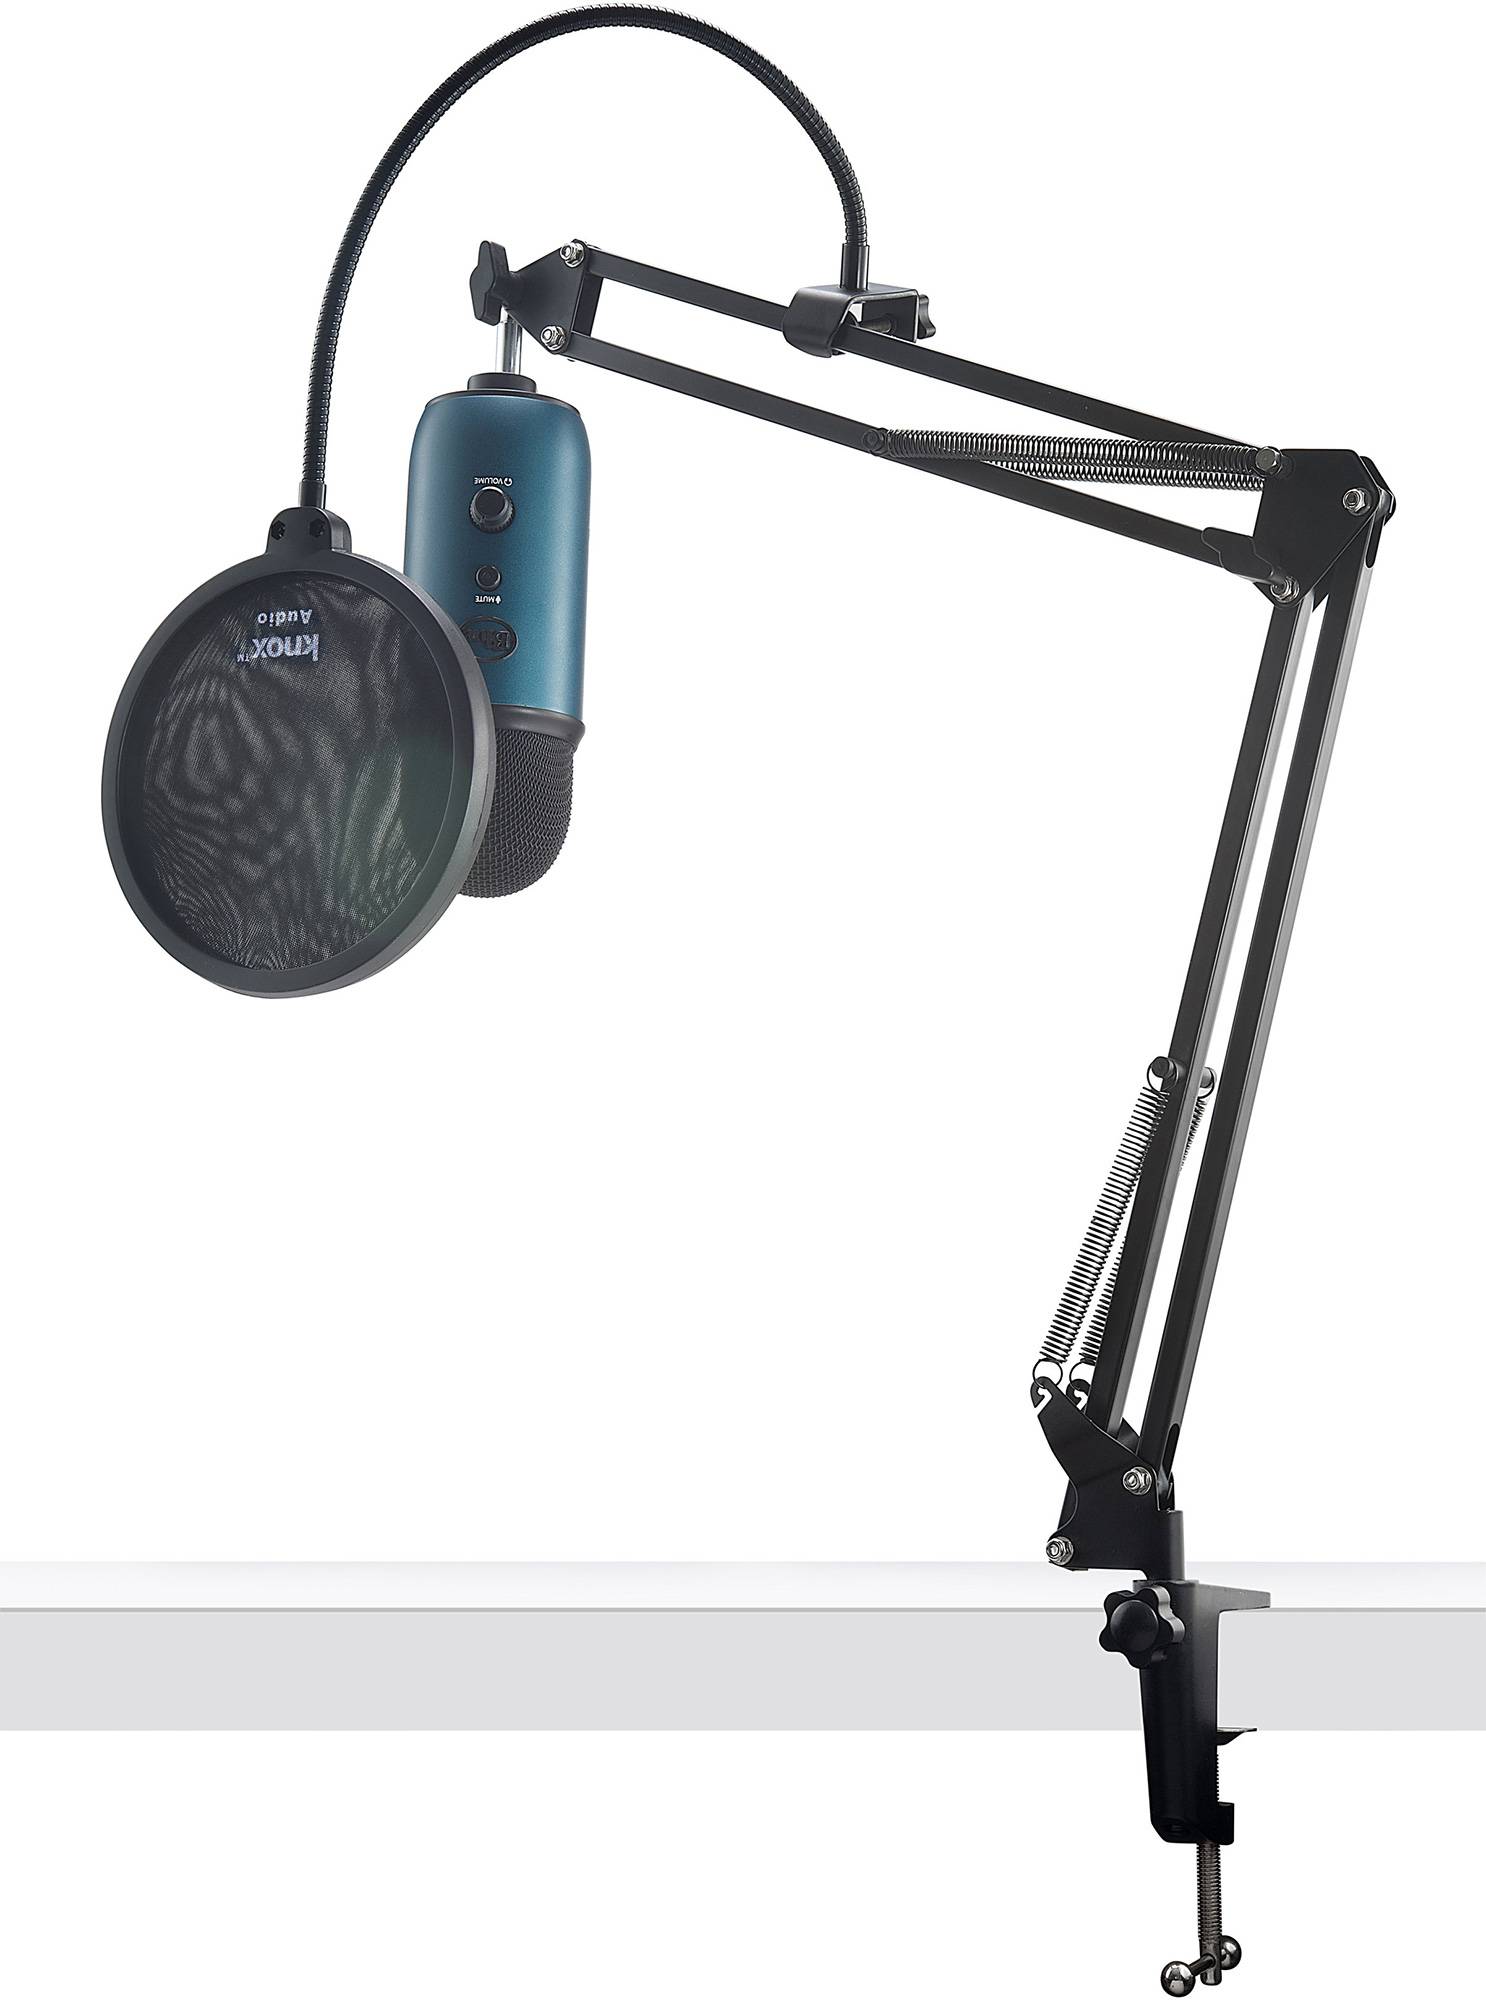 Blue Microphones Yeti Teal USB Microphone w/ Knox Studio Arm & Pop Filter